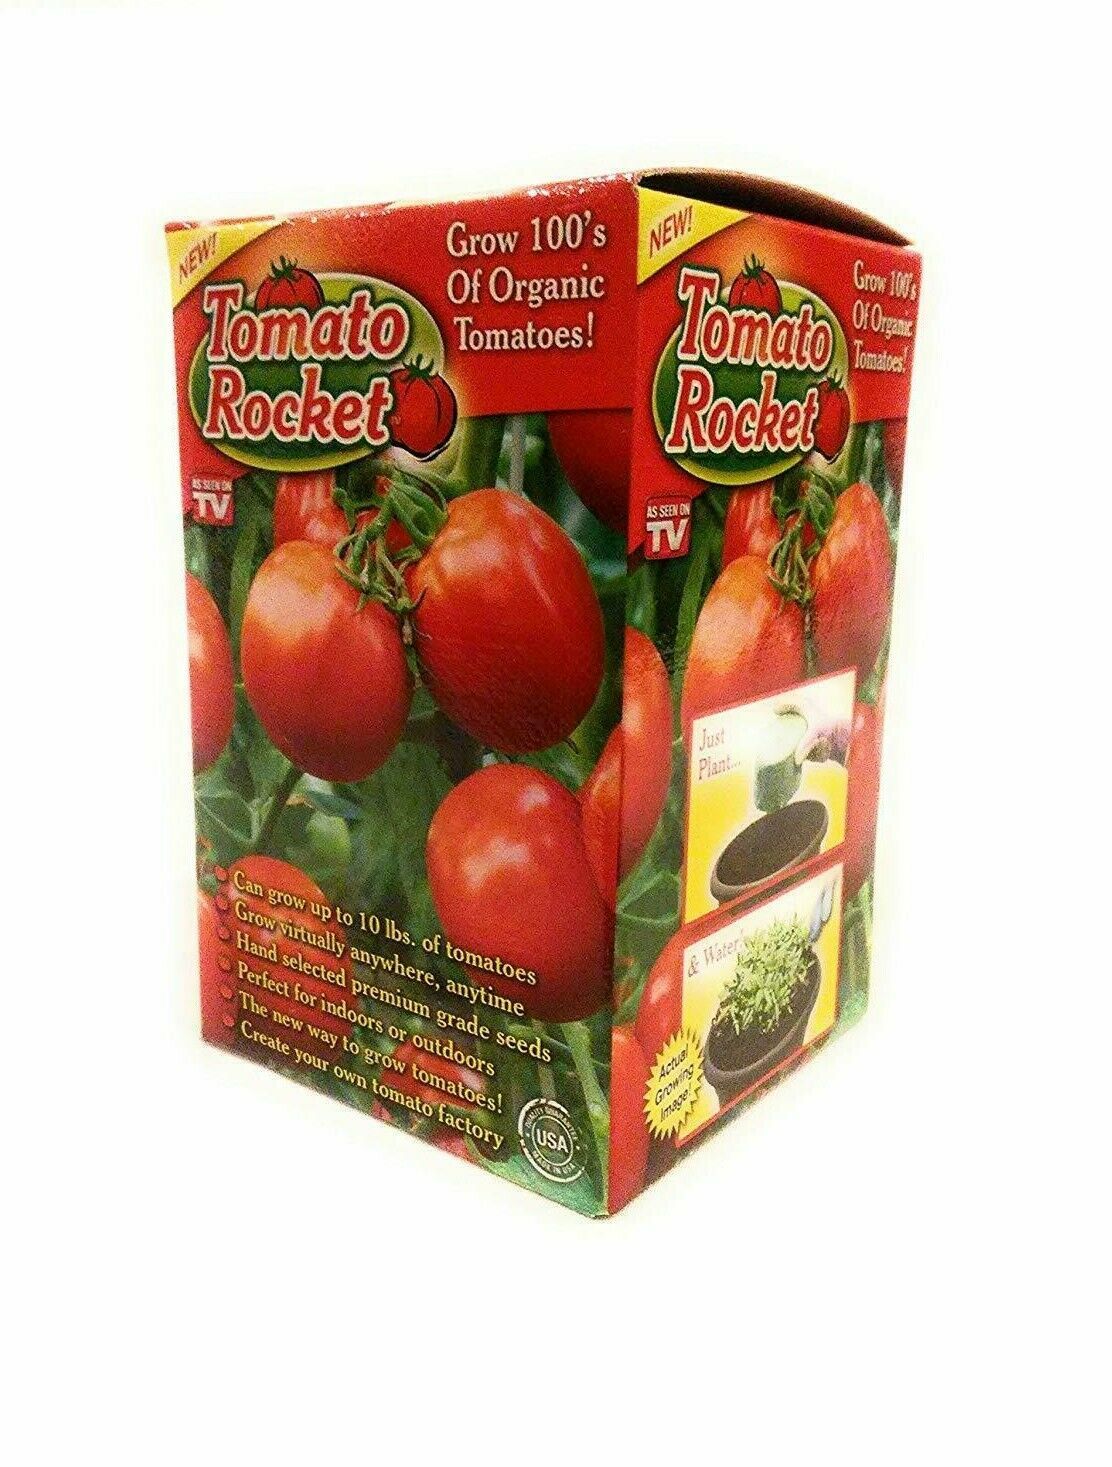 Tomato Rocket AS SEEN ON TV Tomato Rocket Kit Over Makes 10 lbs - $9.85